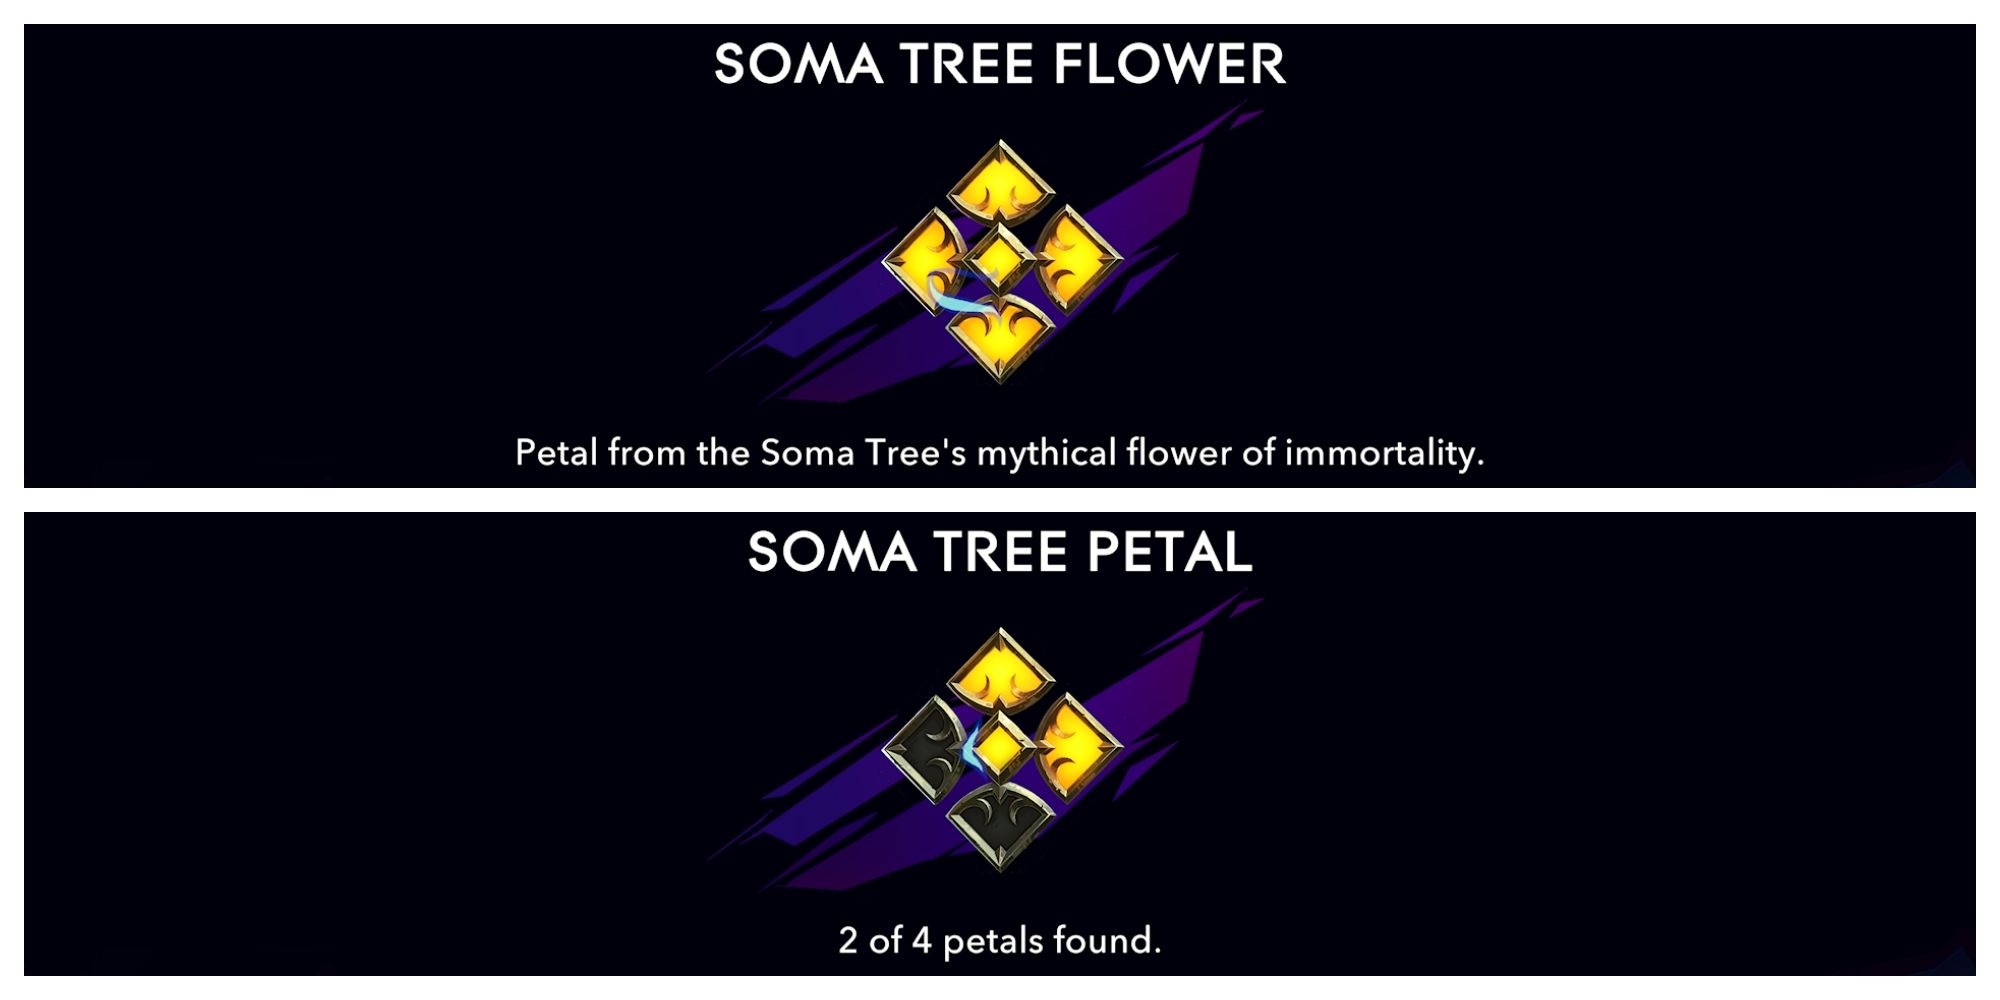 PoP-Soma-Tree-Flower-Petal-Featured